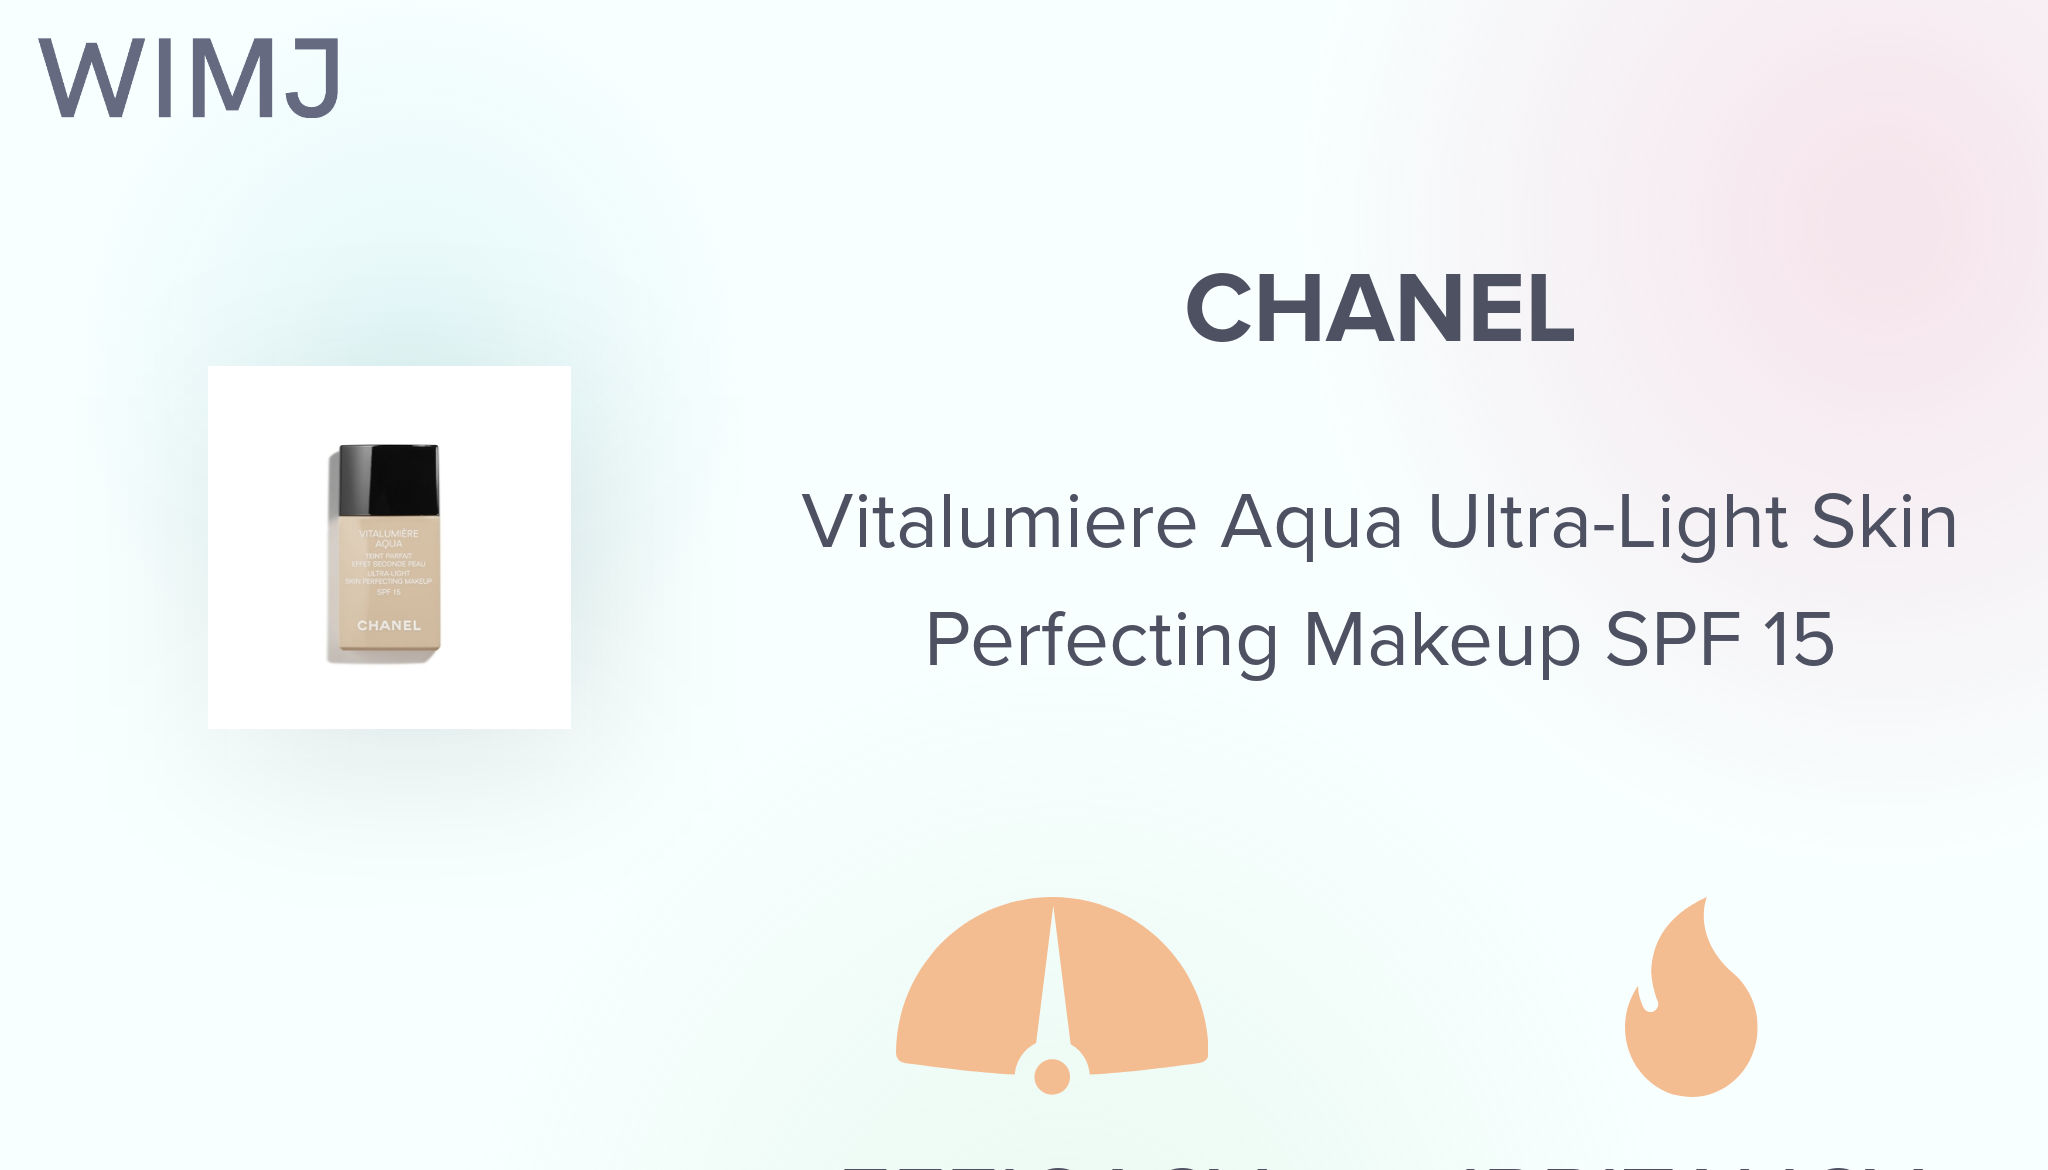 vitalumiere aqua ultra-light skin perfecting makeup by chanel